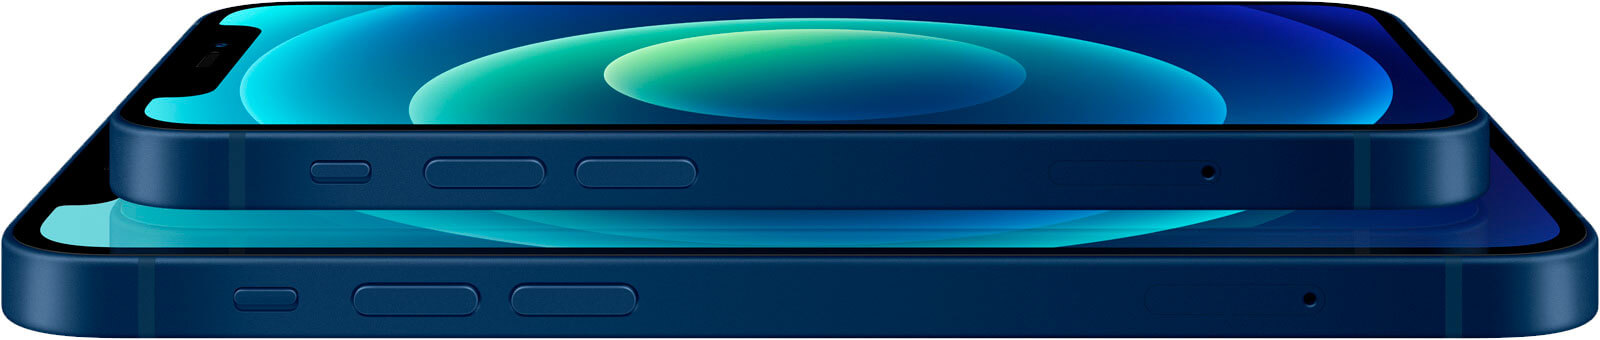 Nuevo iPhone 12 Azul Barato